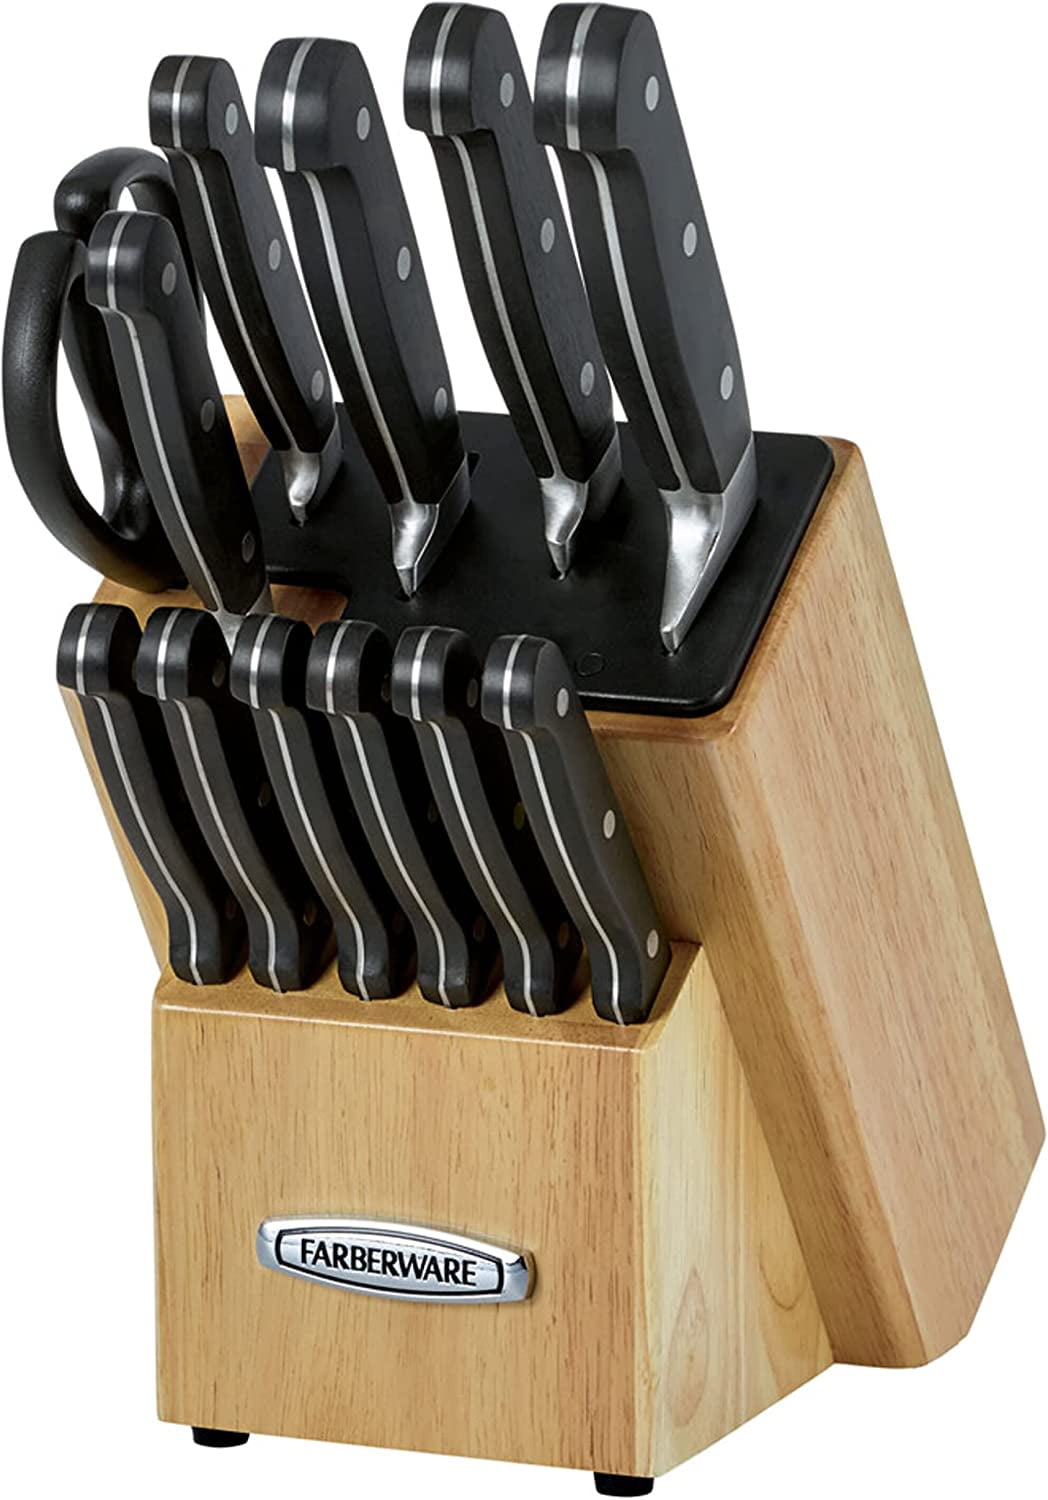 Kitchen Knife Set With Self-Sharpening Block - Yahoo Shopping